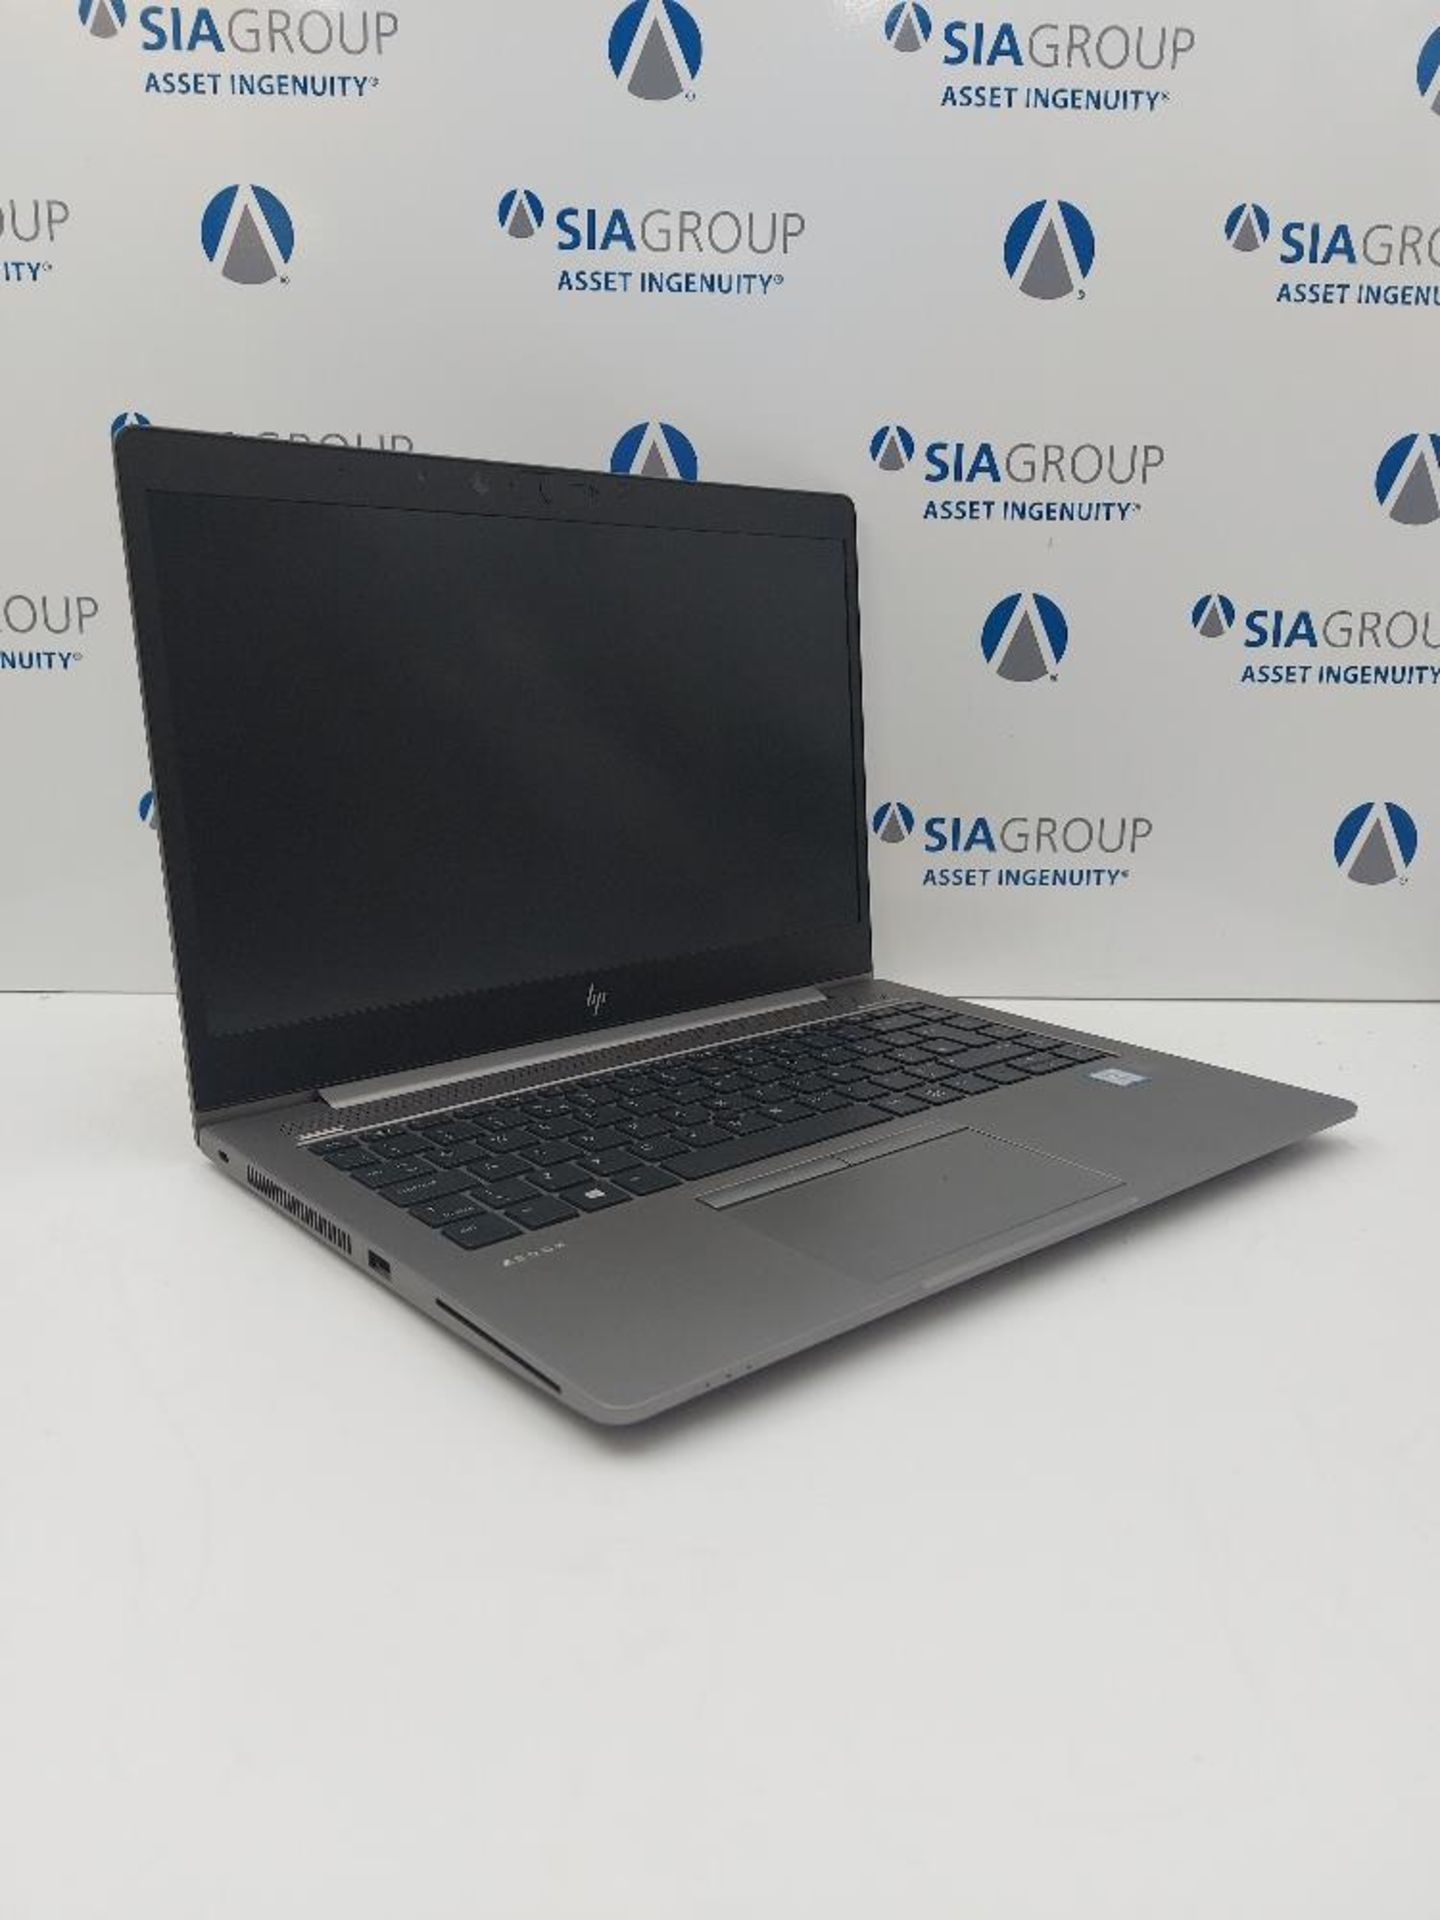 HP Zbook 14u G5 Laptop with Flight Case